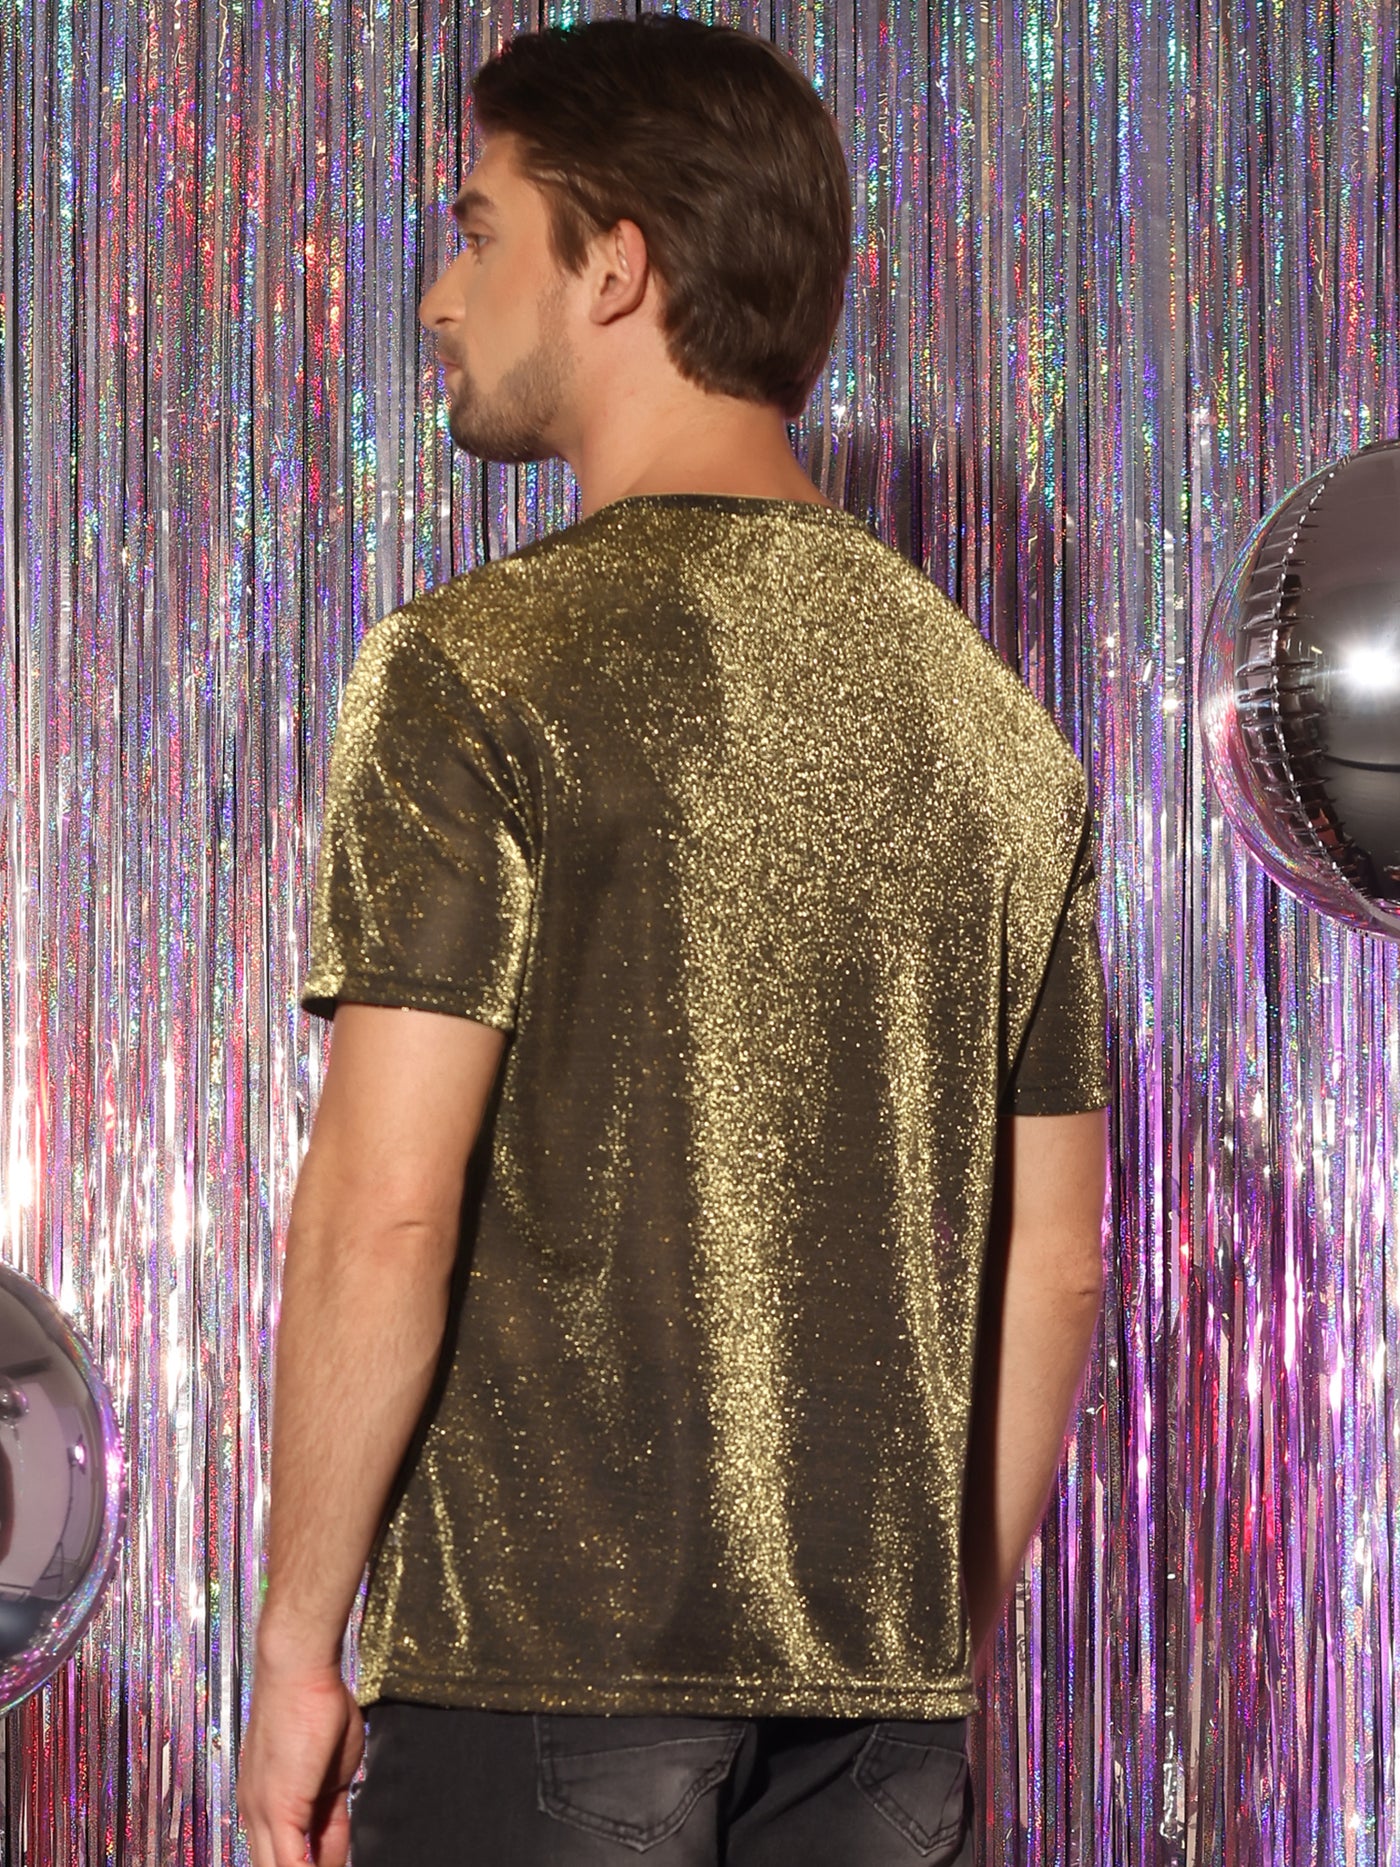 Bublédon Men's Sheer Mesh Short Sleeves See Through Party Disco Tee T-Shirts Tops